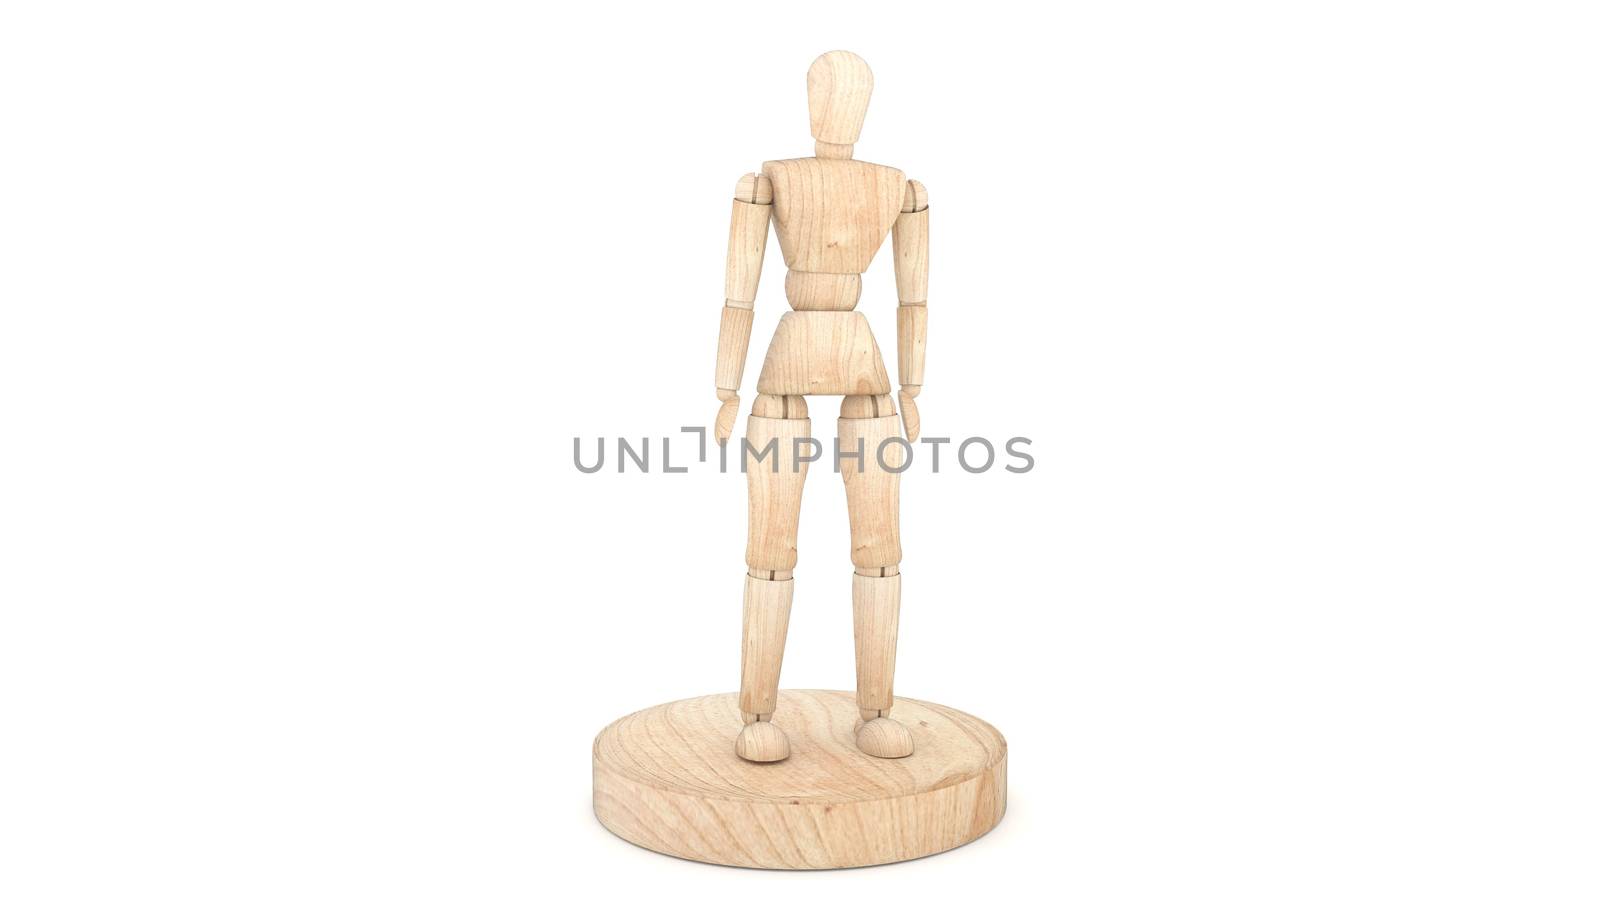 Wooden Dummy Stand, Show, Present. 3D rendering